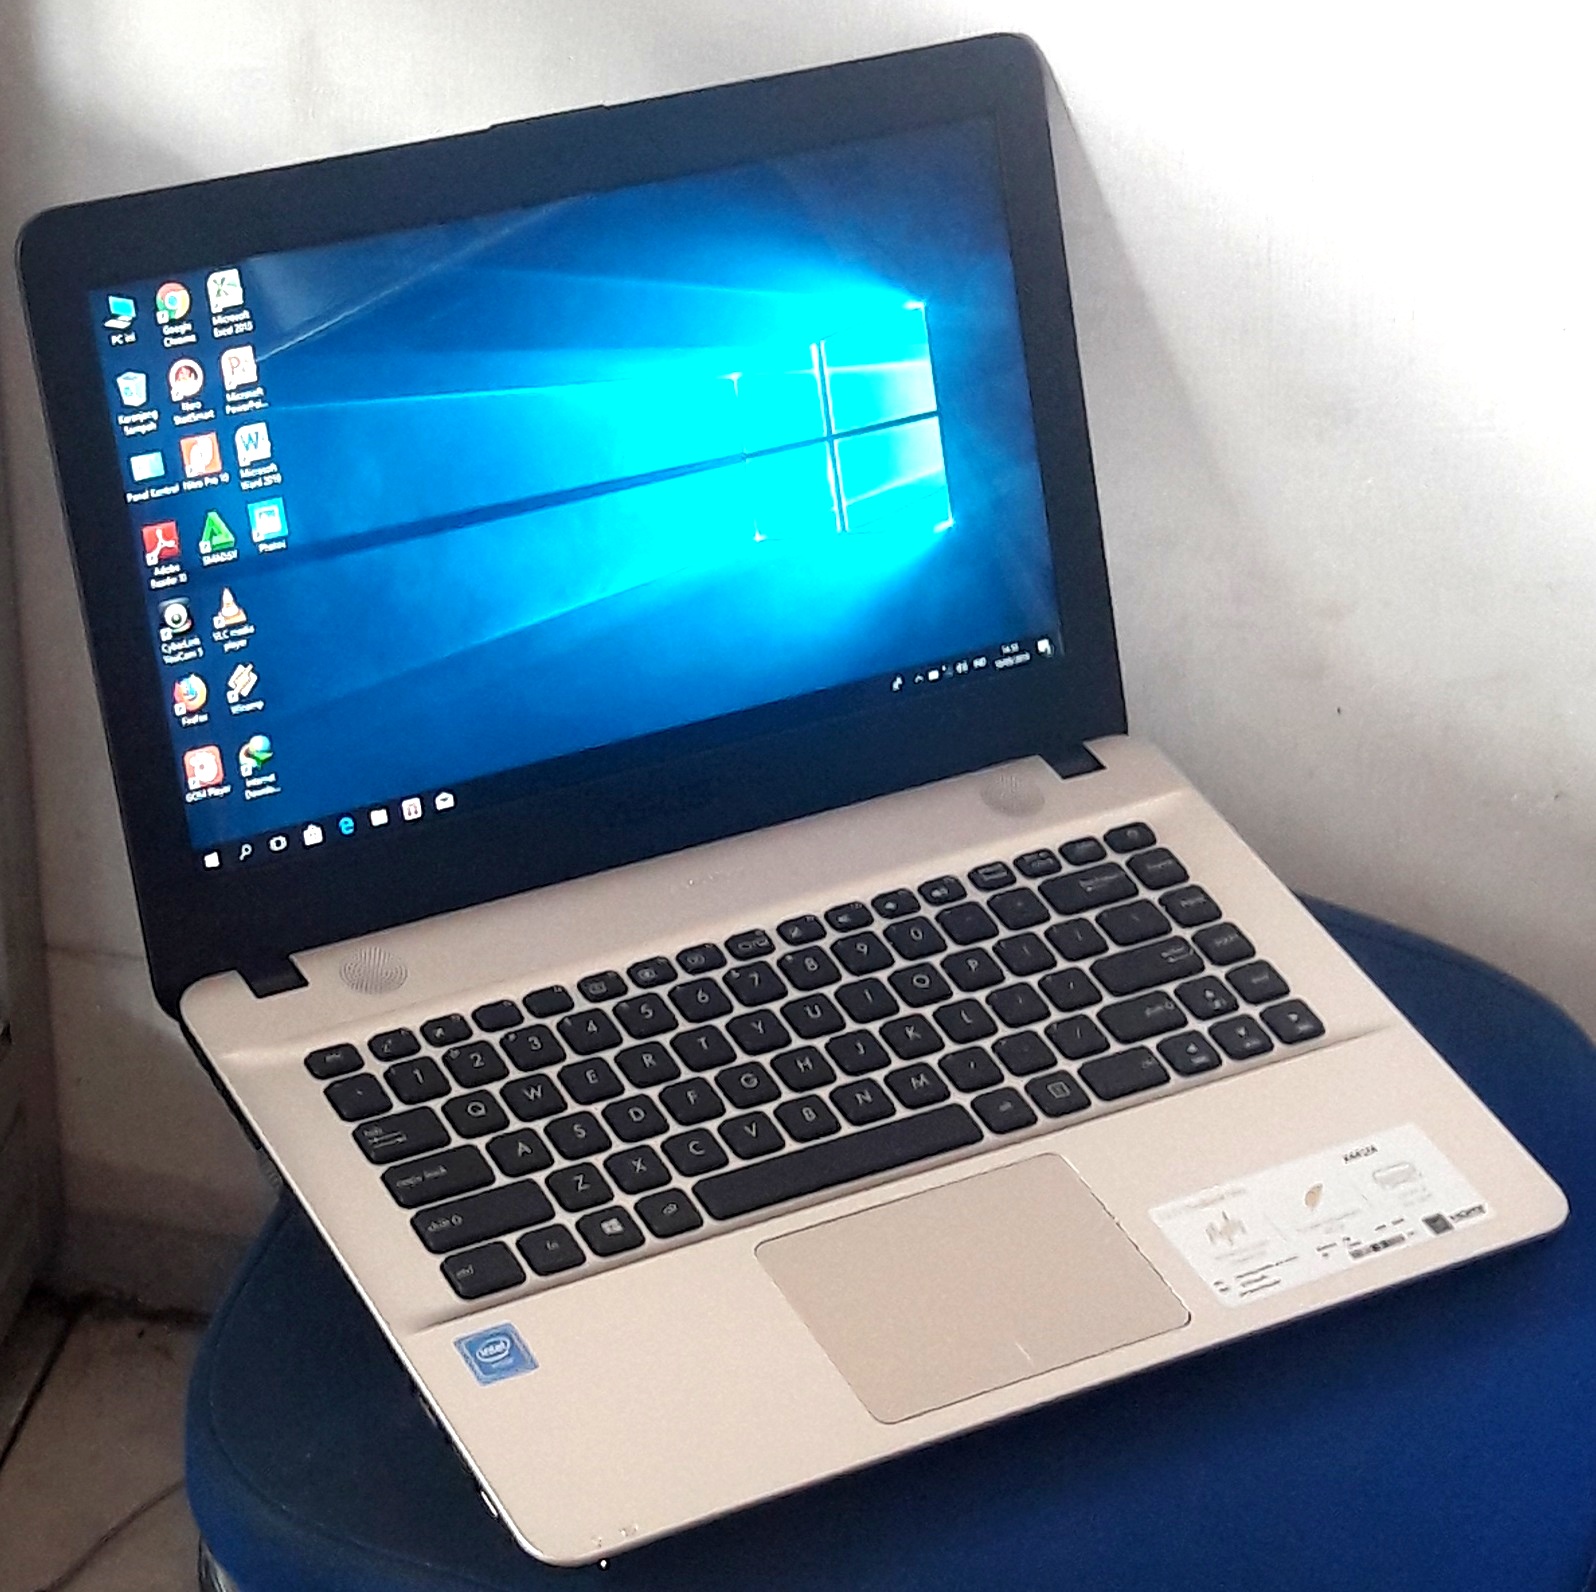 Tempat Jual Laptop Seken Murah di Semarang